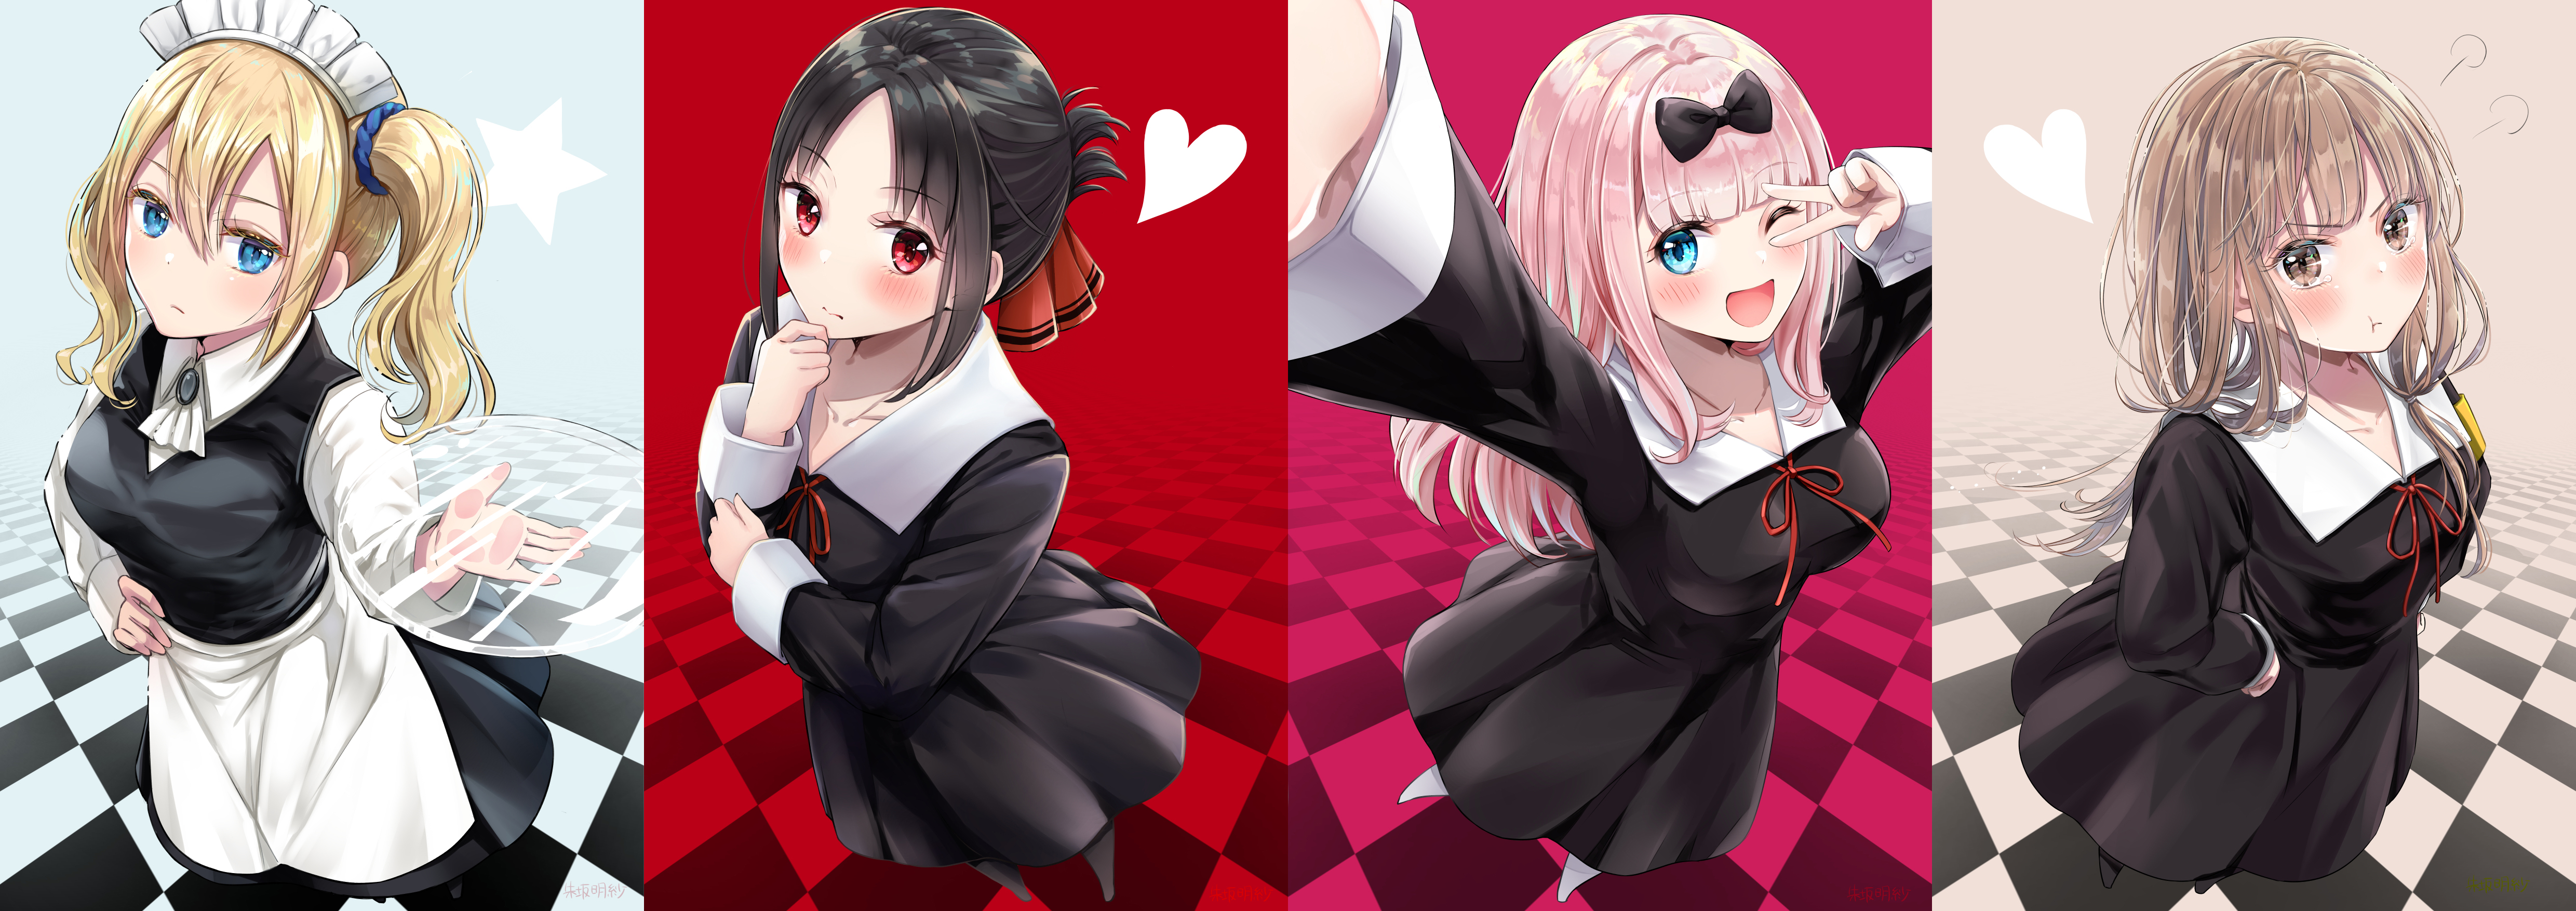 Kaguya-sama: Love is War HD Wallpapers and Backgrounds. 